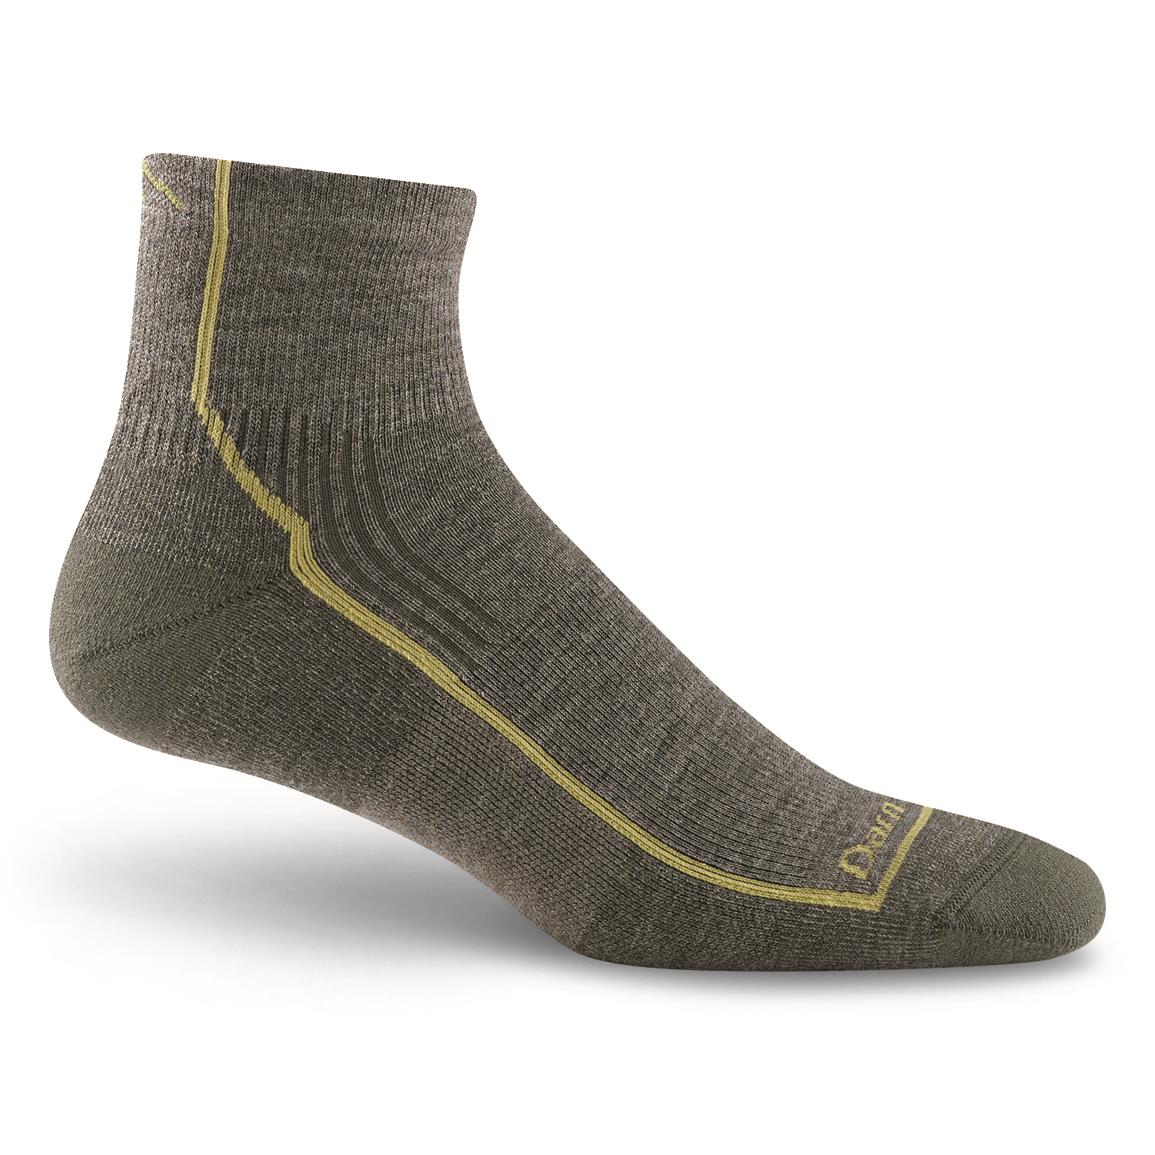 Darn Tough Men's Hiker Quarter Cushion Socks, Hiker Taupe